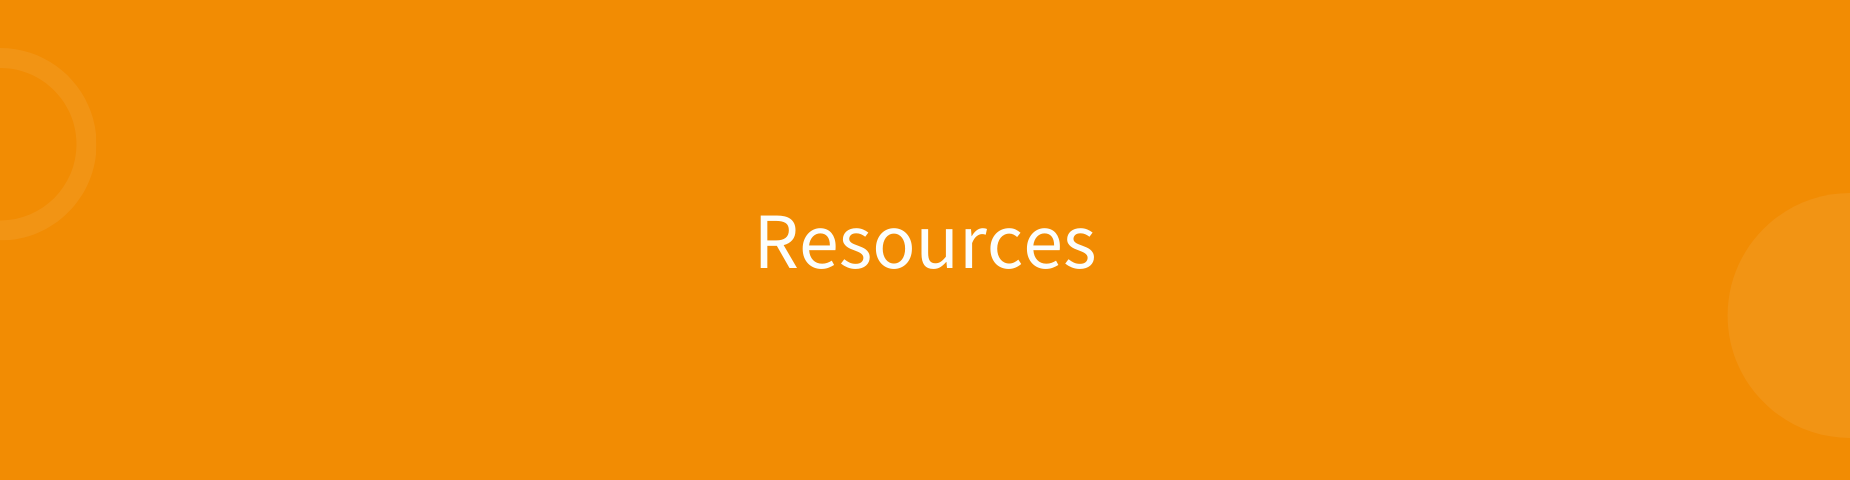 Resources Header English